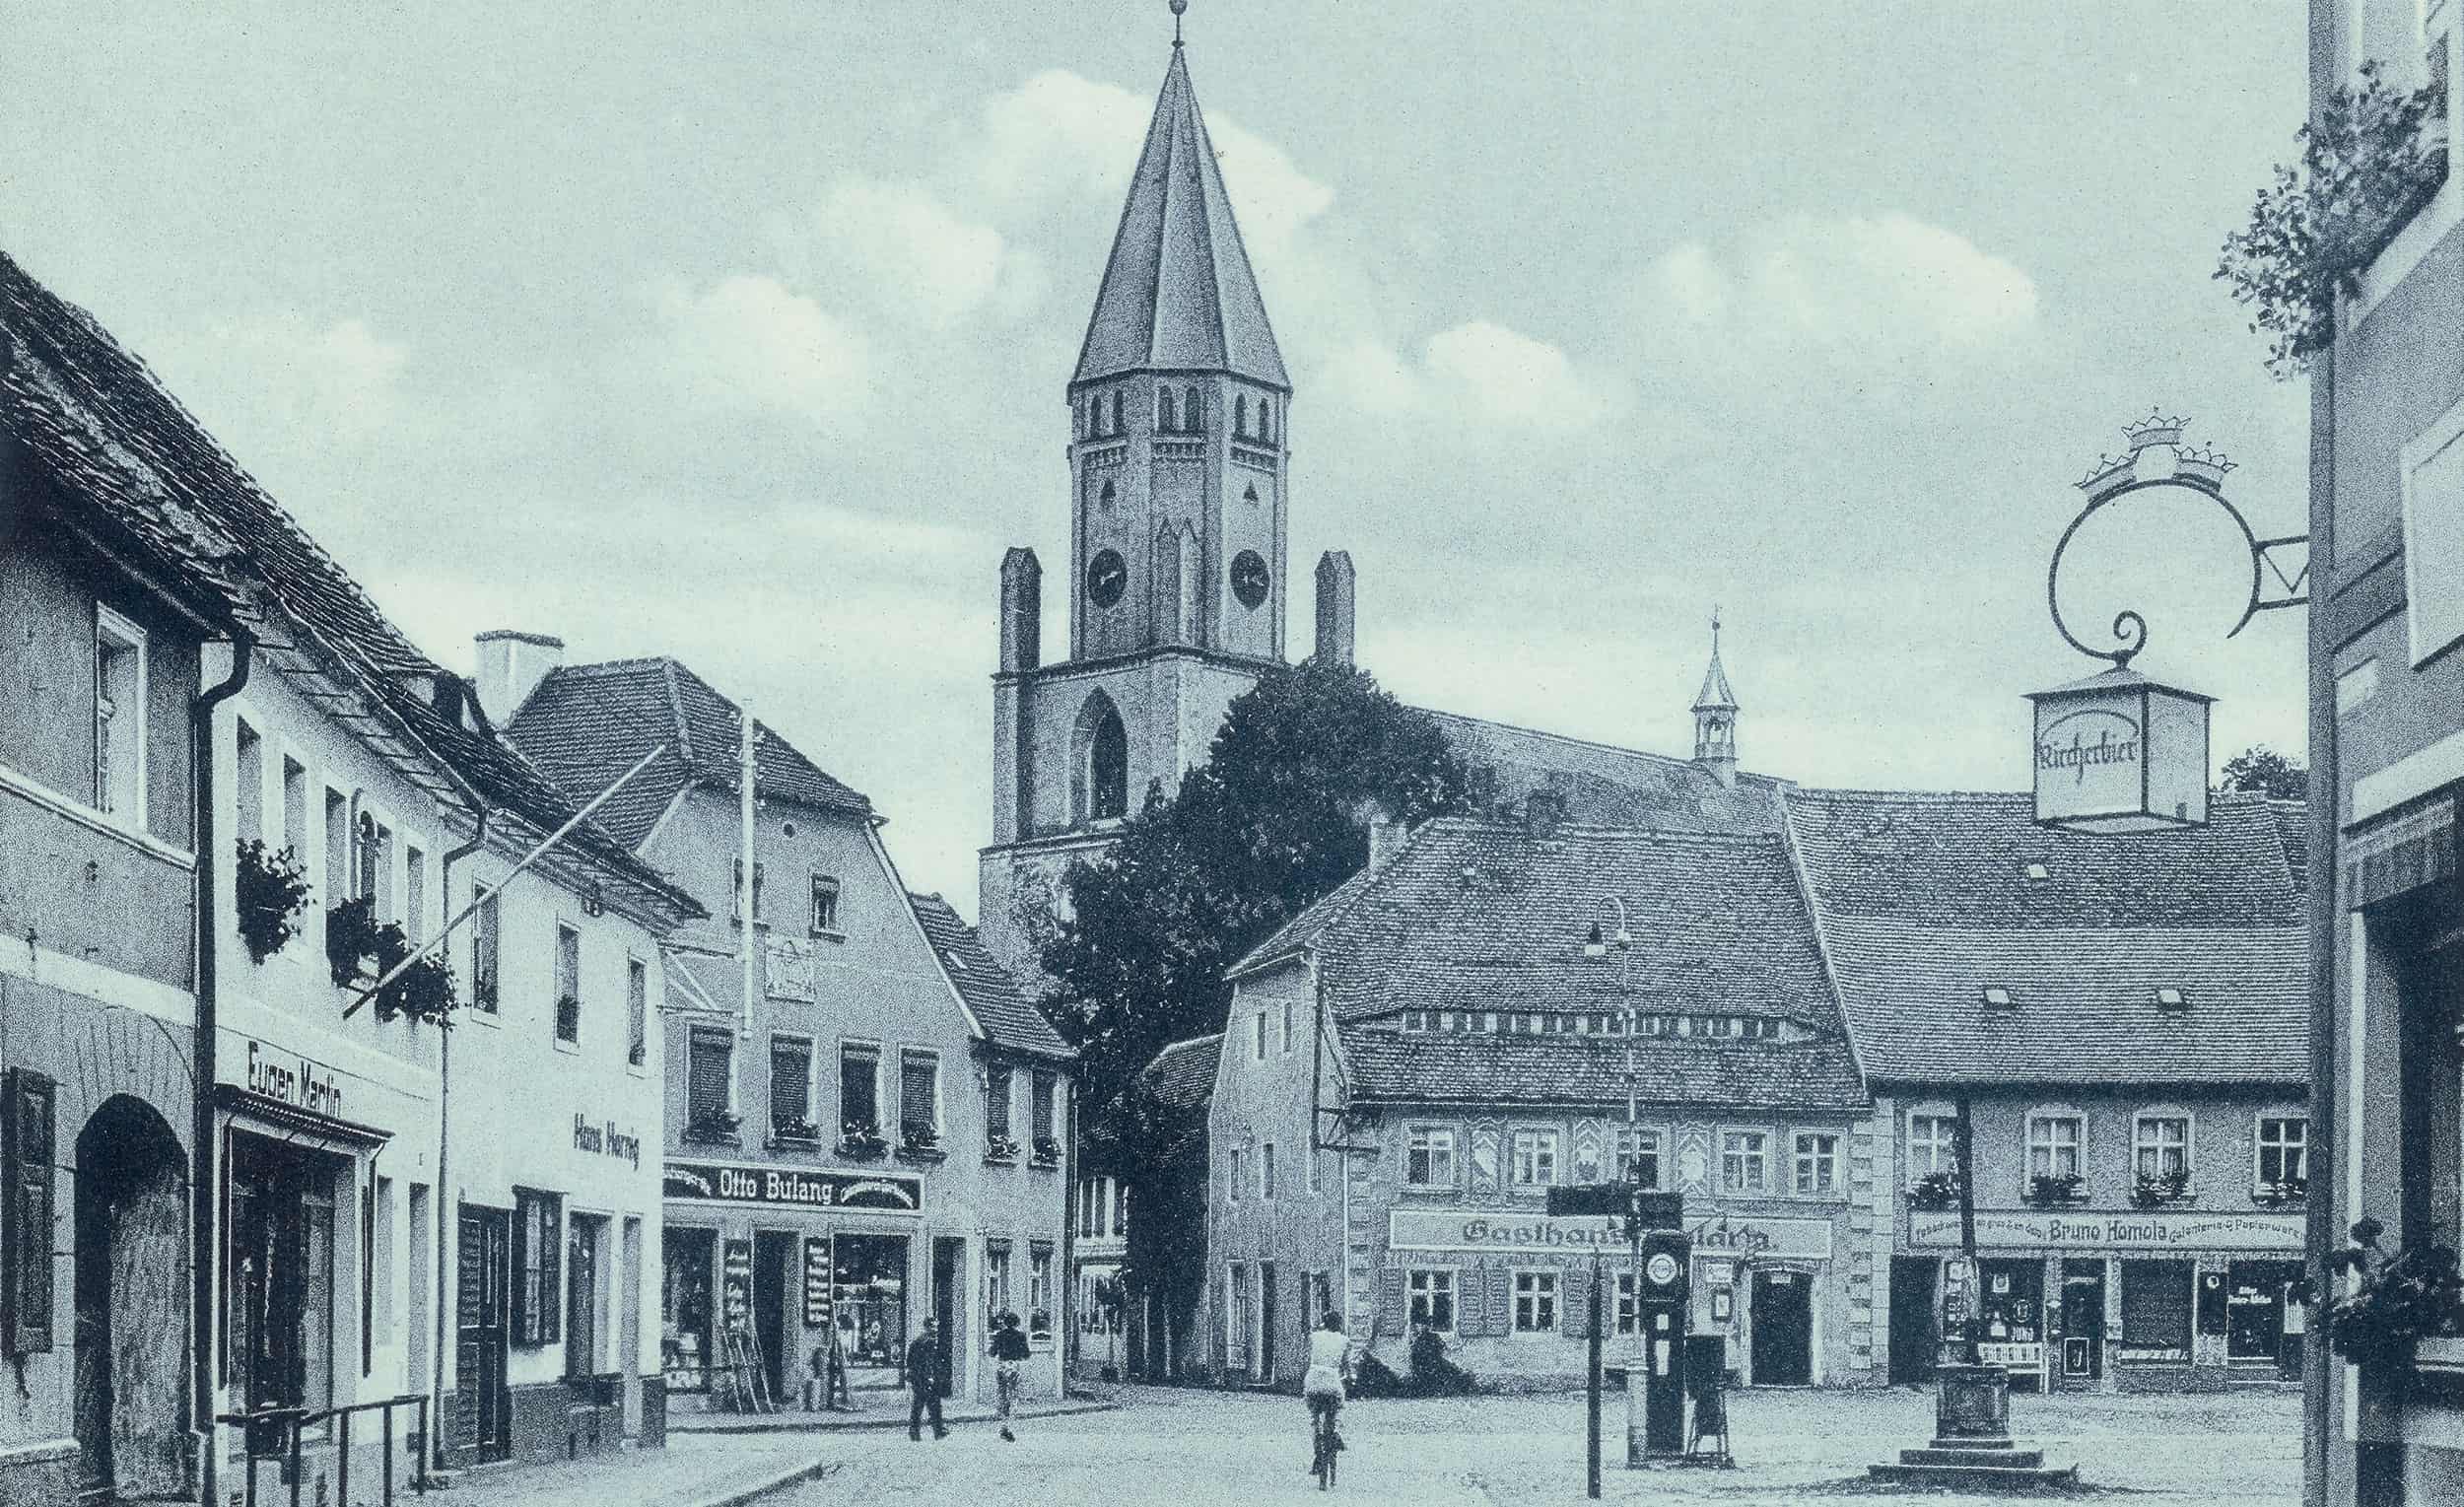 Marktplatz Wittichenau